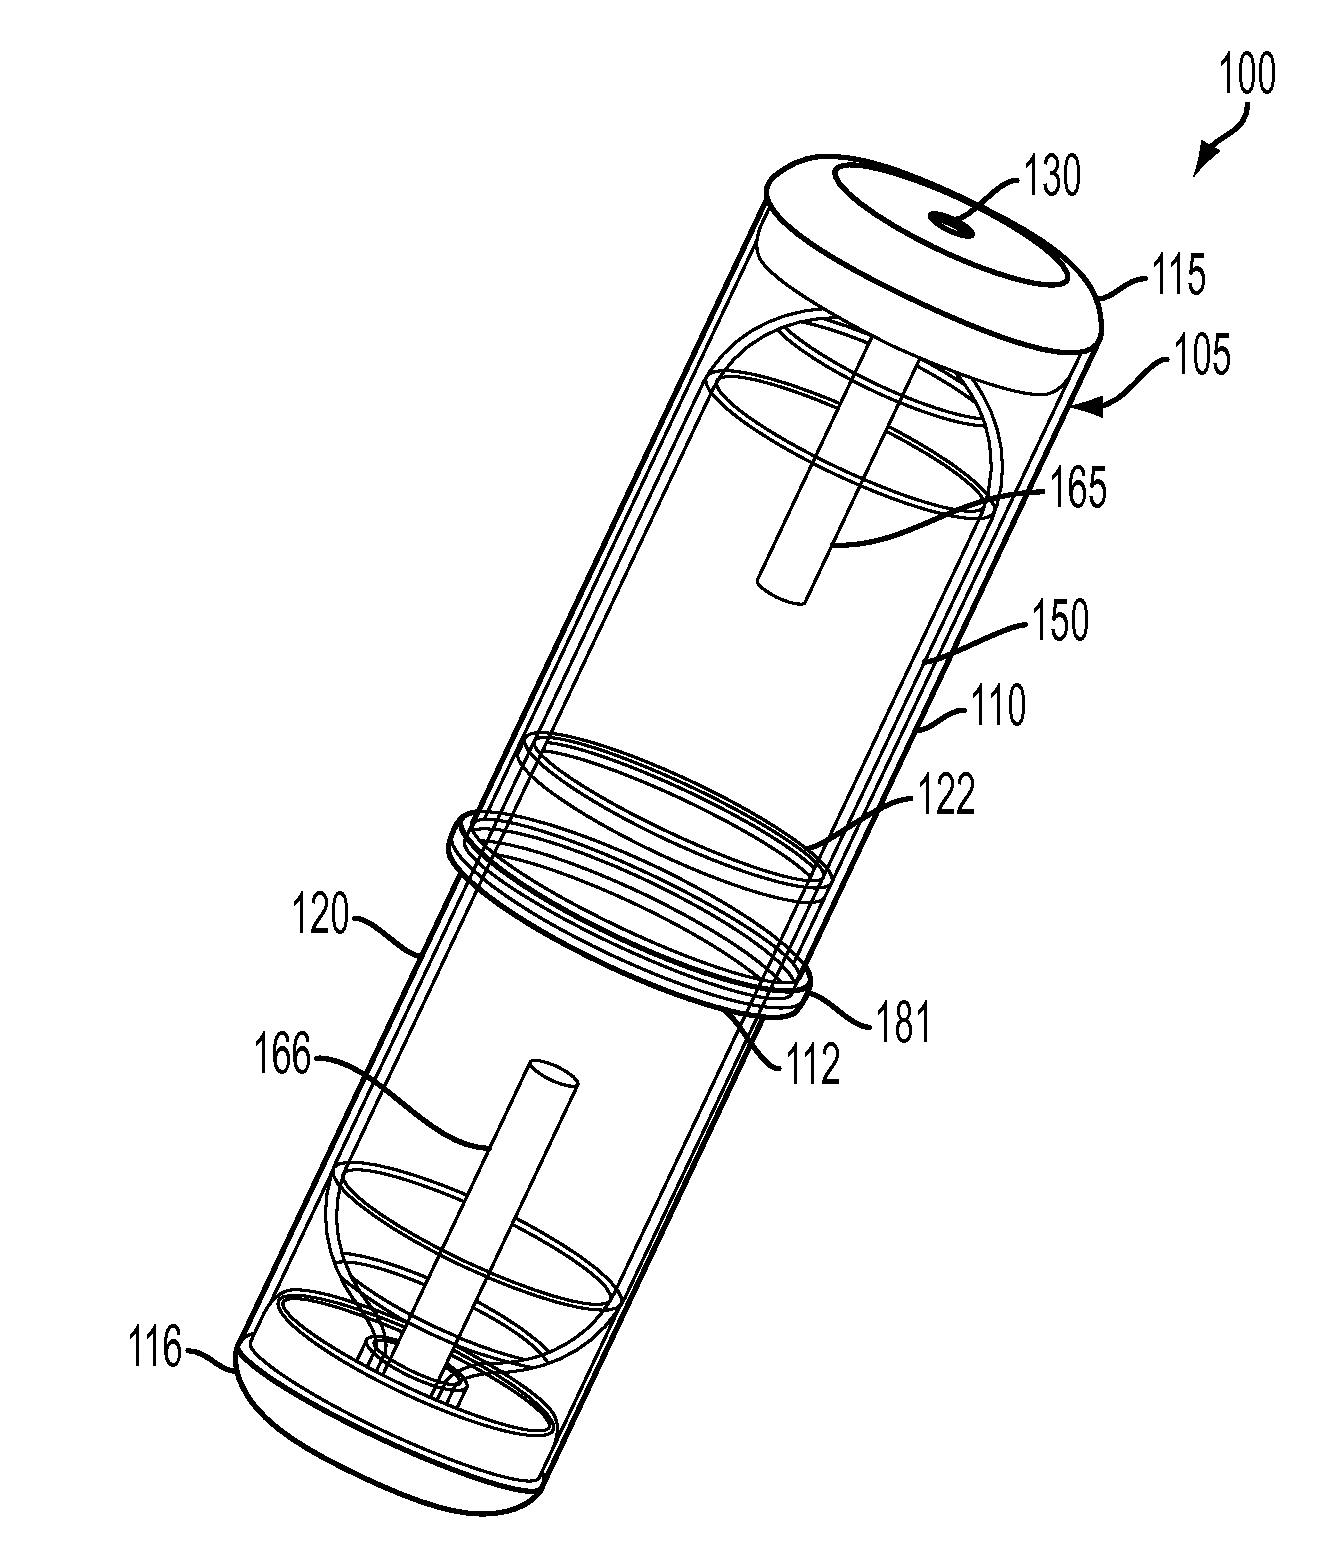 Disposable ambulatory infusion pump having telescopic housing